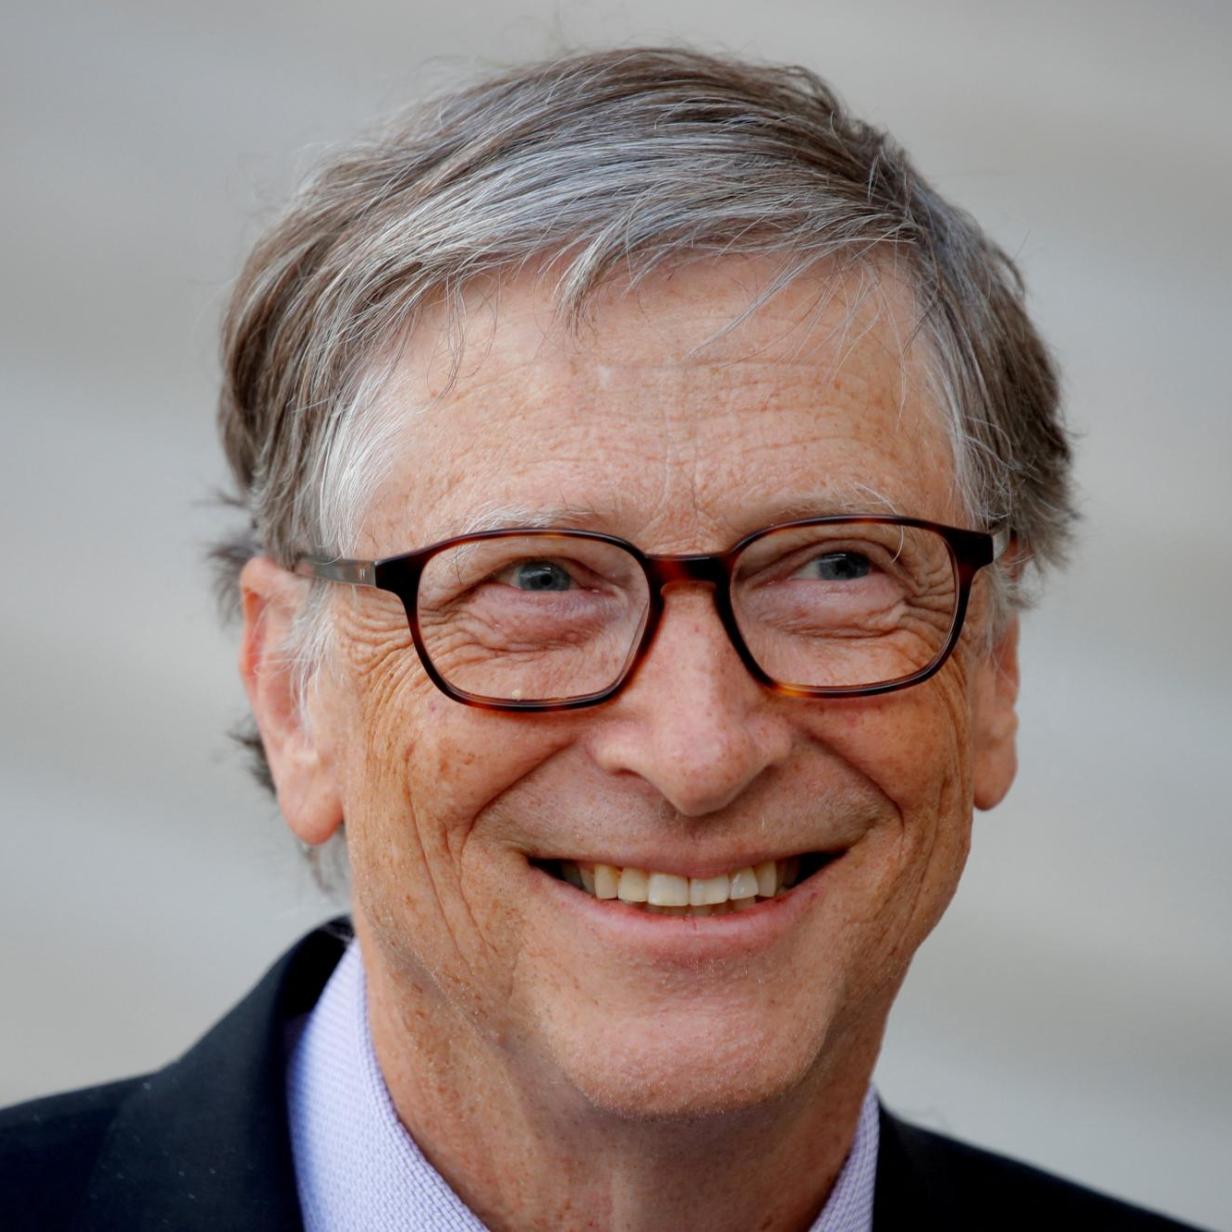 Bill Gates' Mini-Atomkraftwerk soll 2028 ans Netz gehen - hunderte  Reaktoren sollen folgen